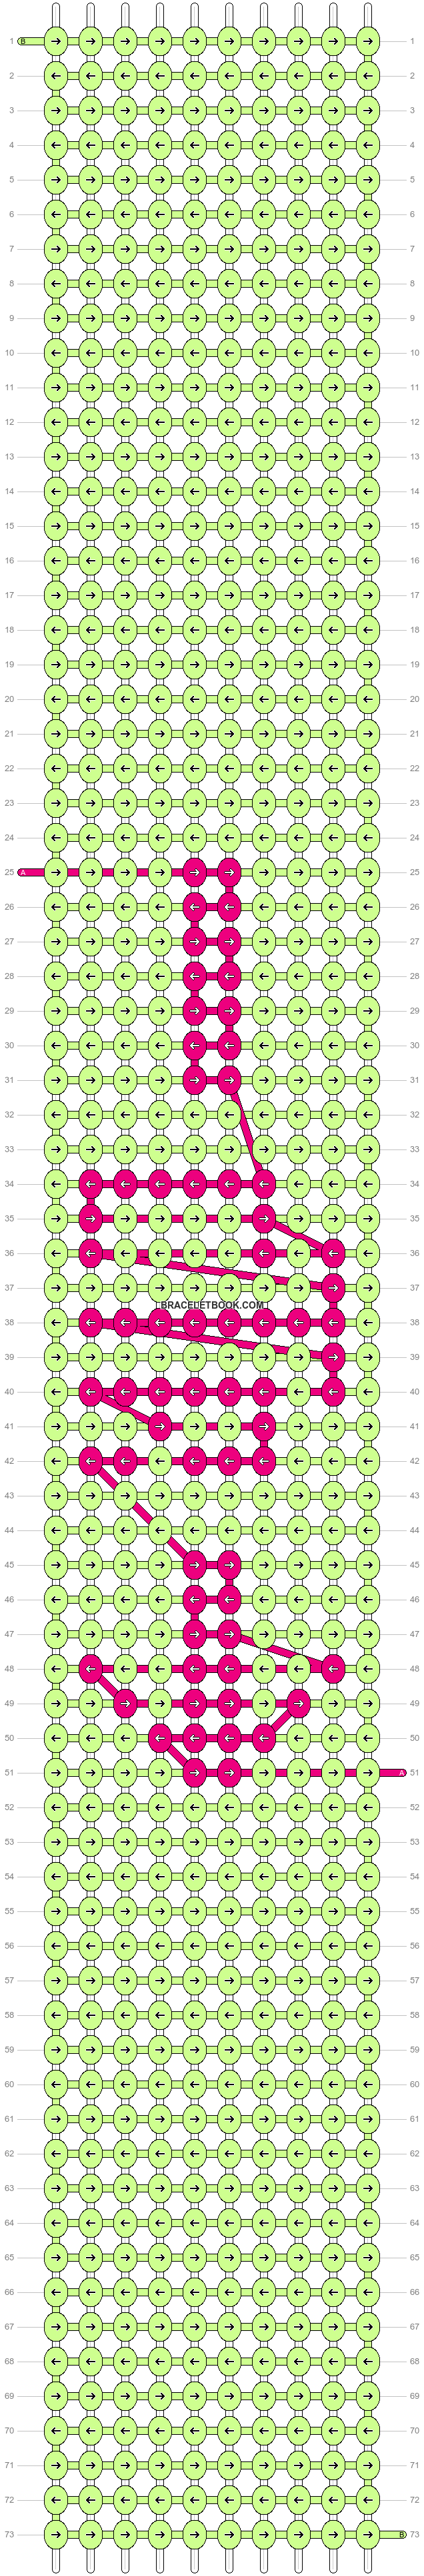 Alpha pattern #62438 variation #113639 pattern